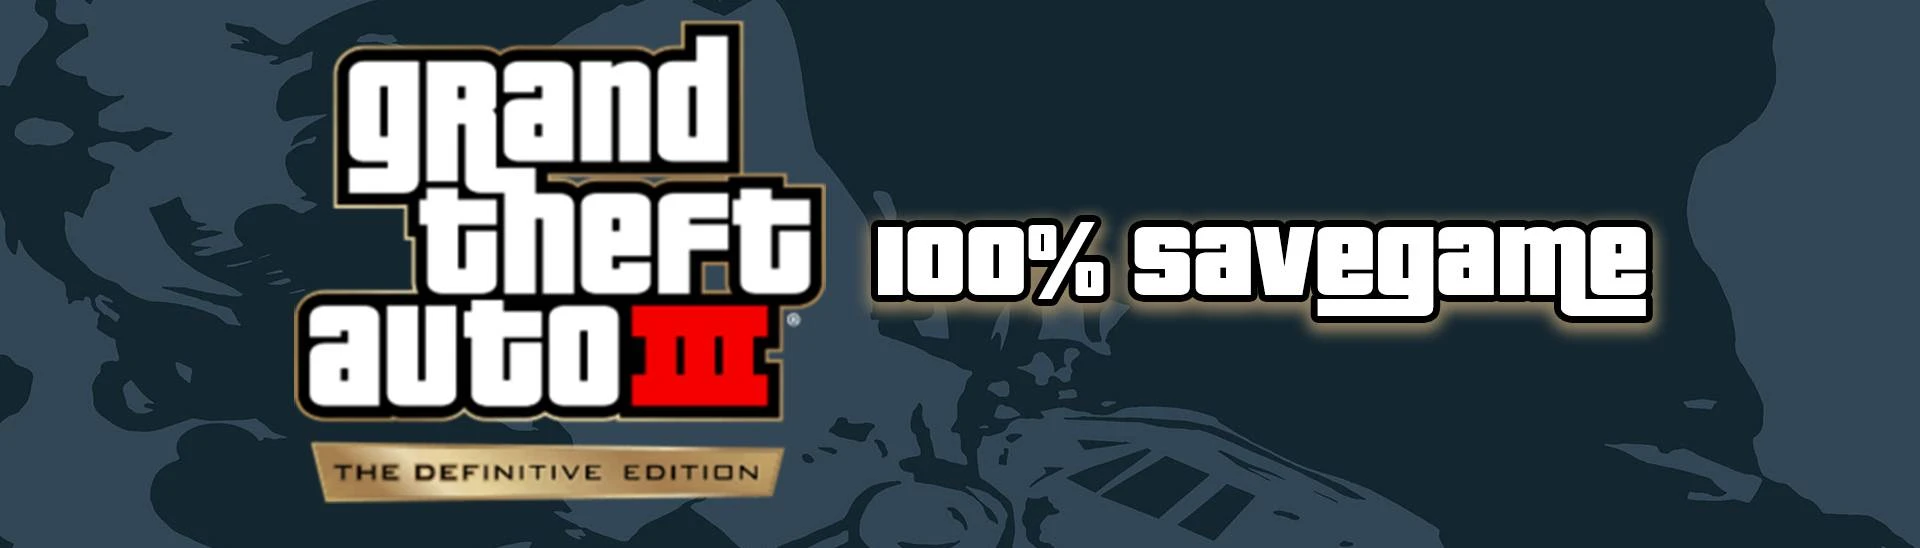 Grand Theft Auto III Definitive Edition 100 Percent Savegame at Grand ...